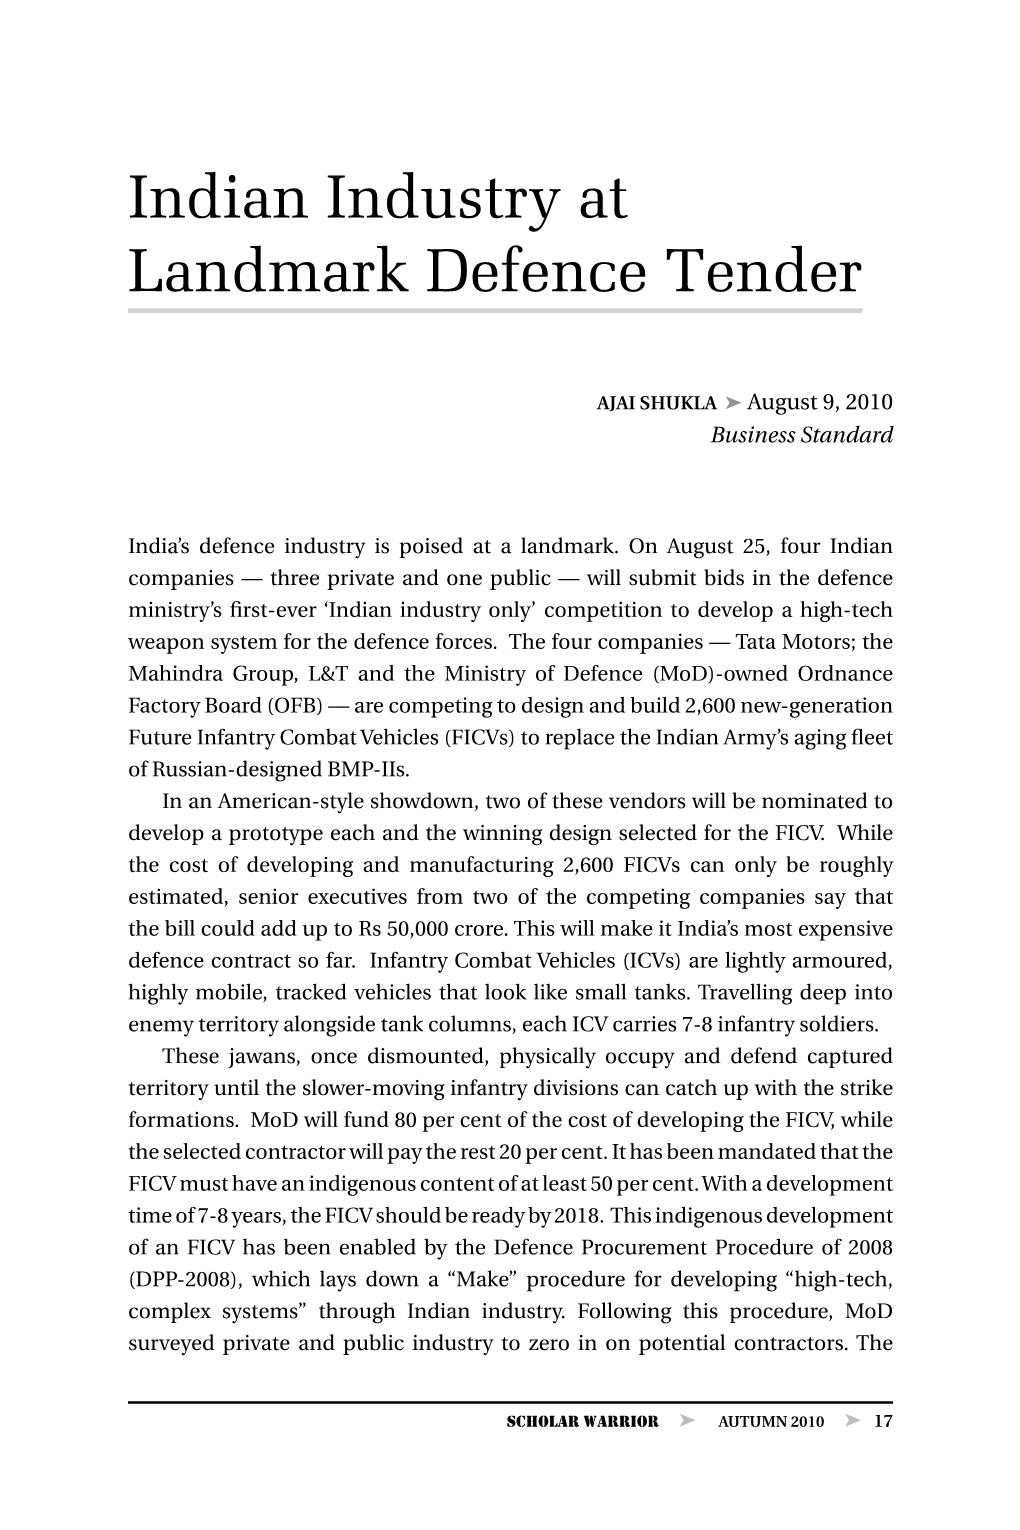 Indian Industry at Landmark Defence Tender, by Ajai Shukla